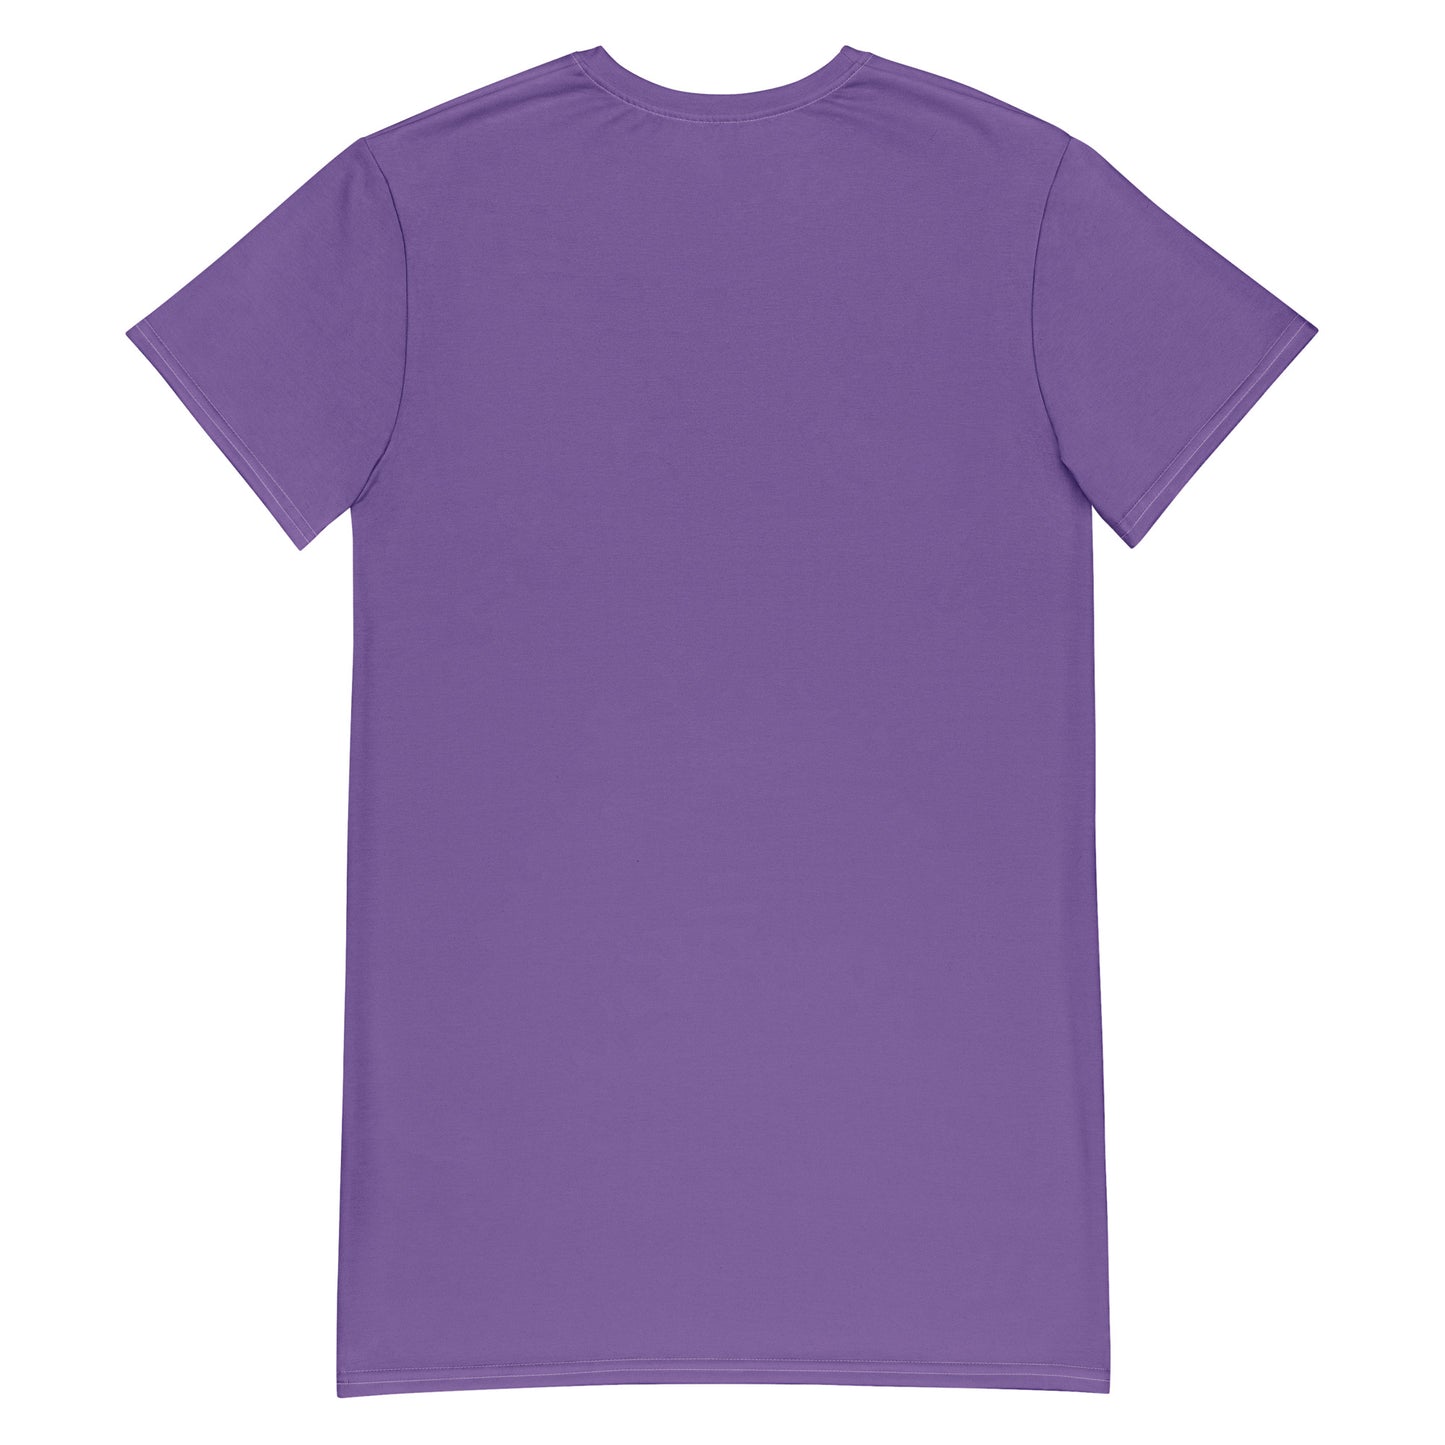 T-shirt Dress: I Love Me Sooo Much (purple)